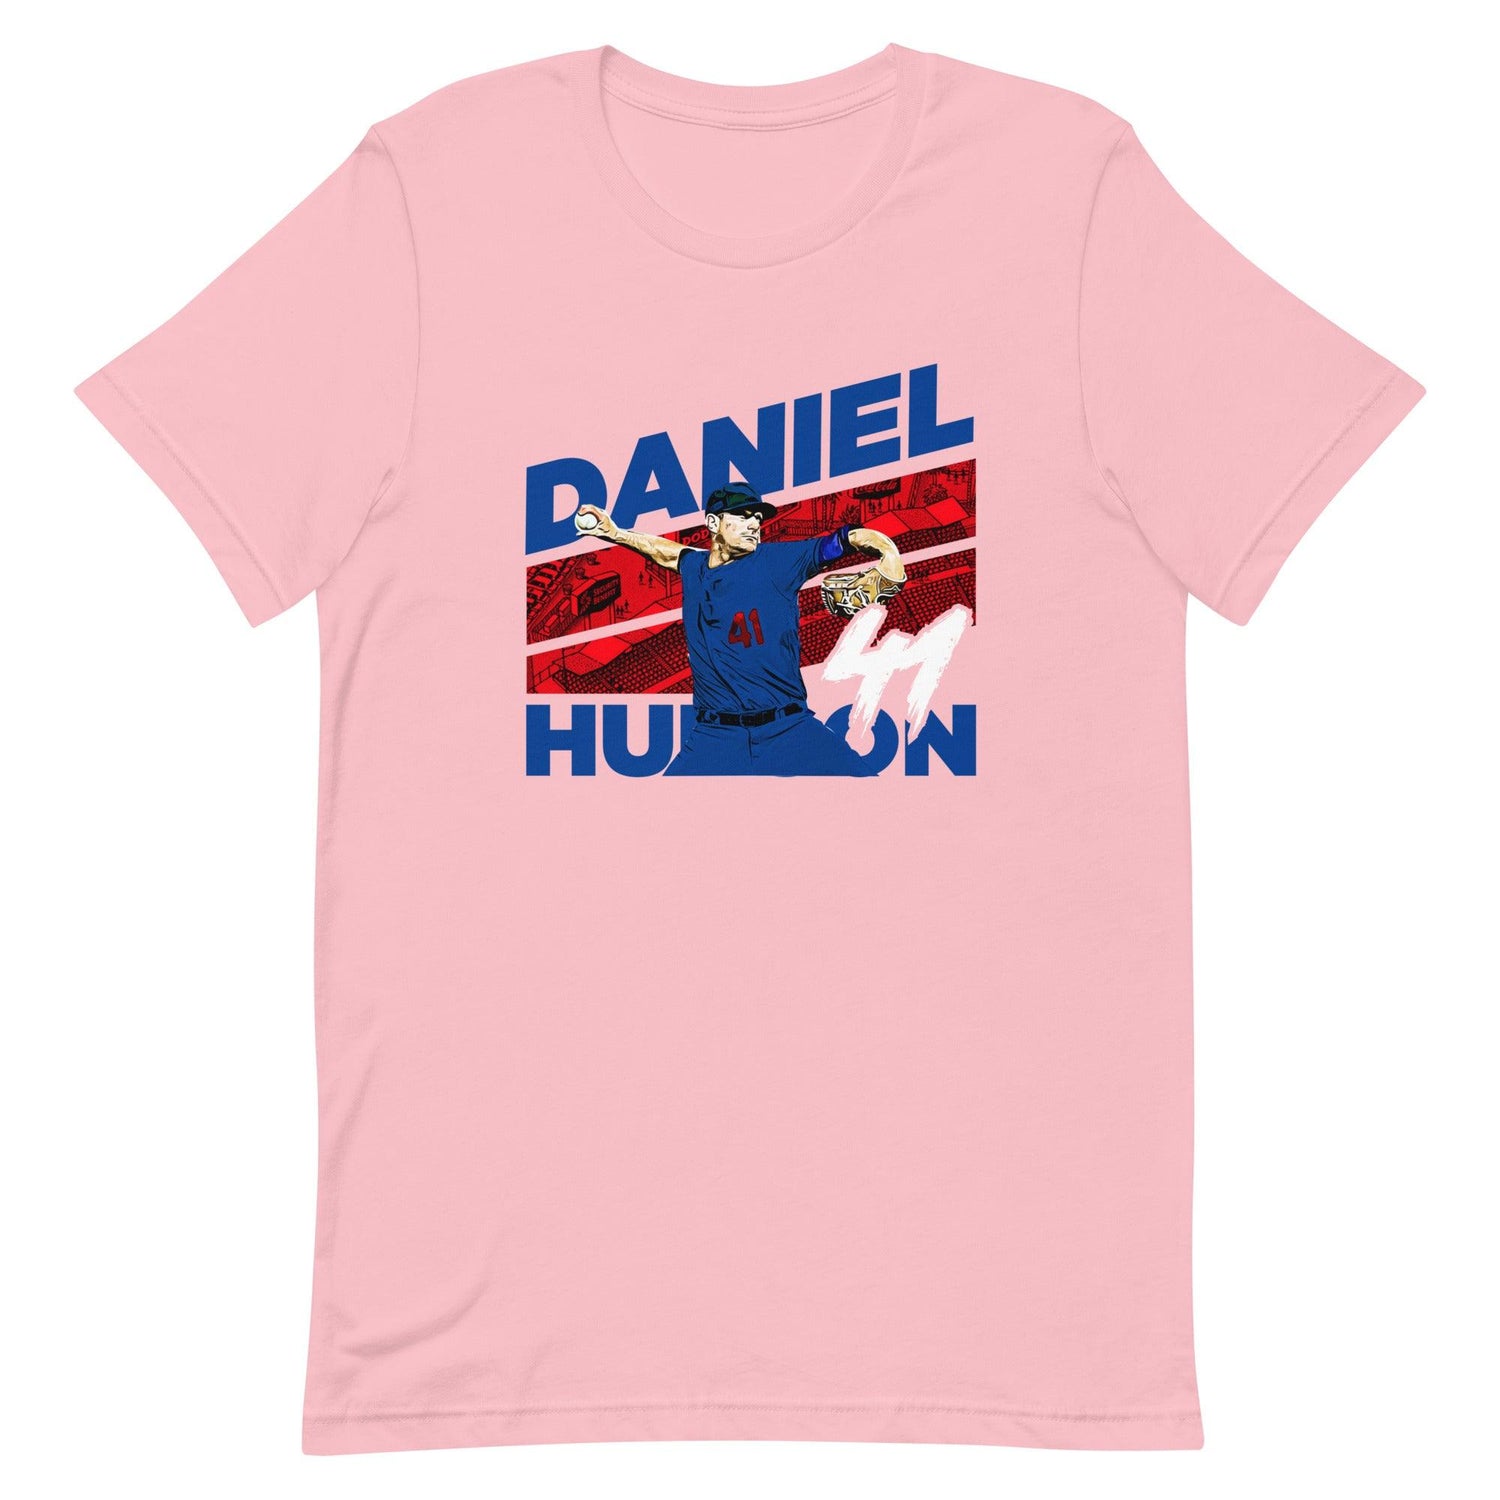 Daniel Hudson "Rotation" t-shirt - Fan Arch